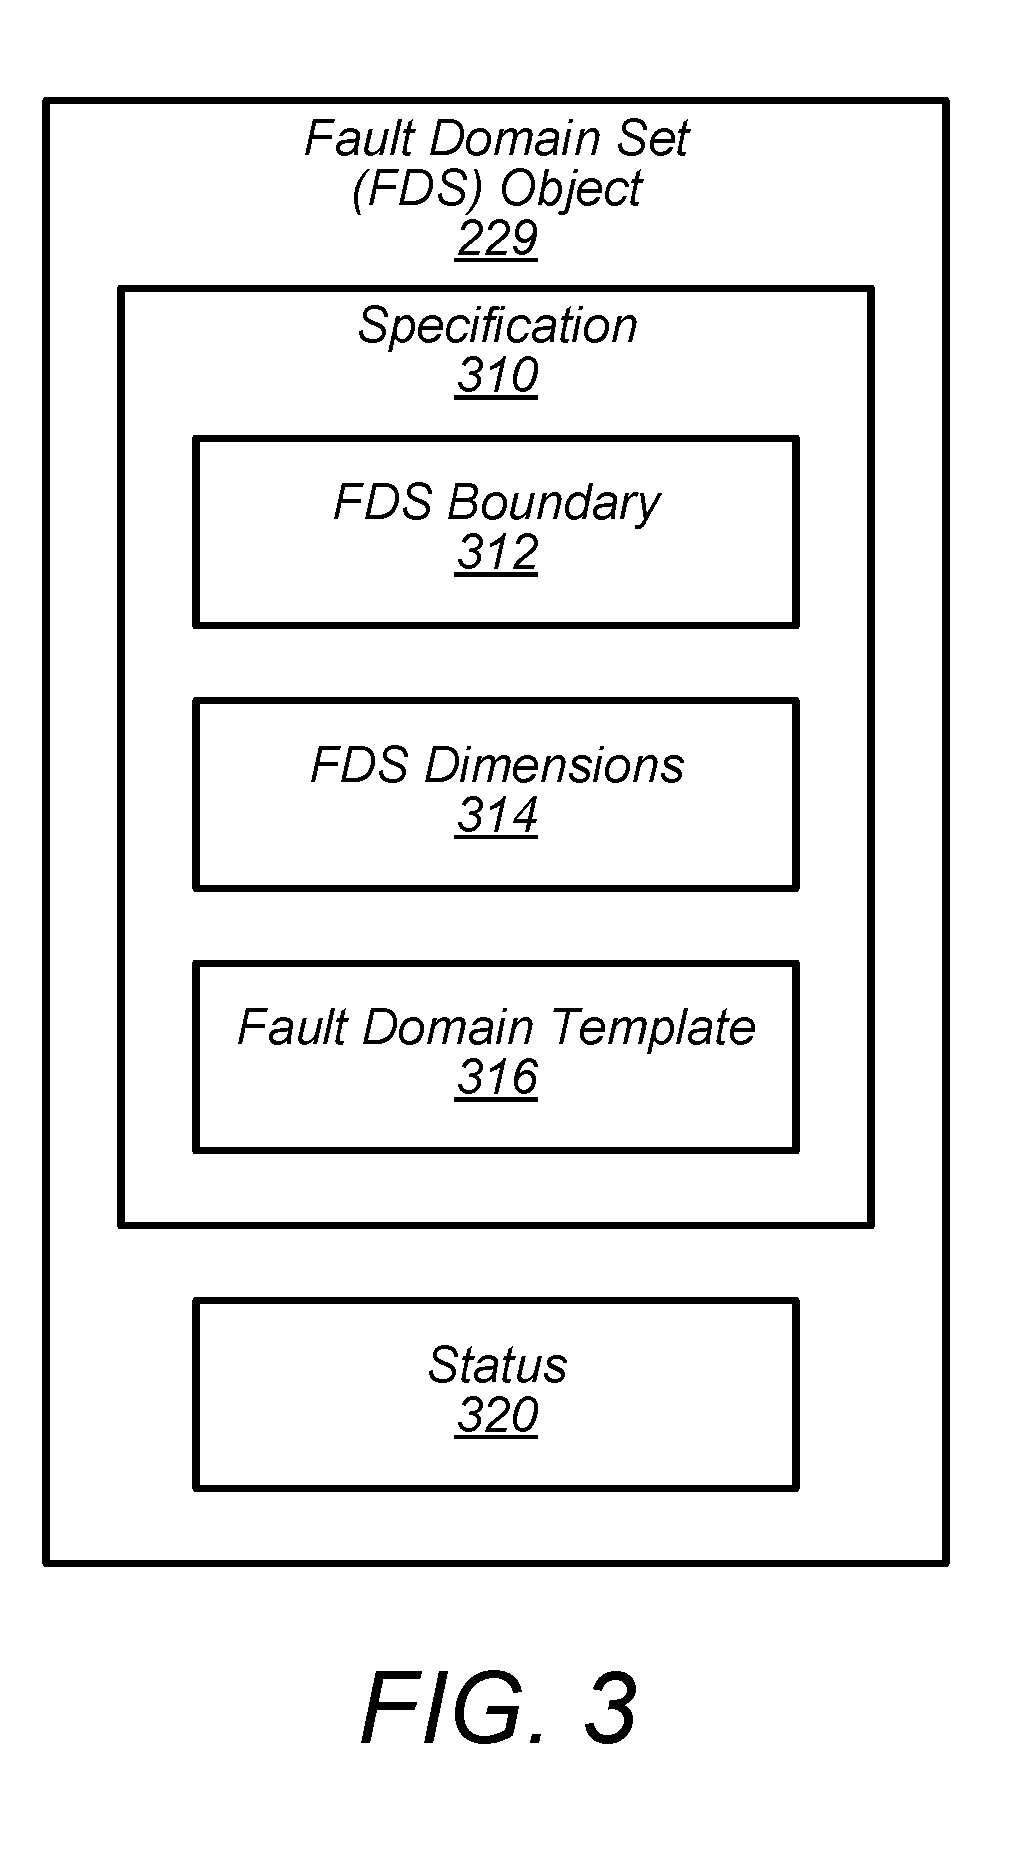 Techniques for implementing fault domain sets